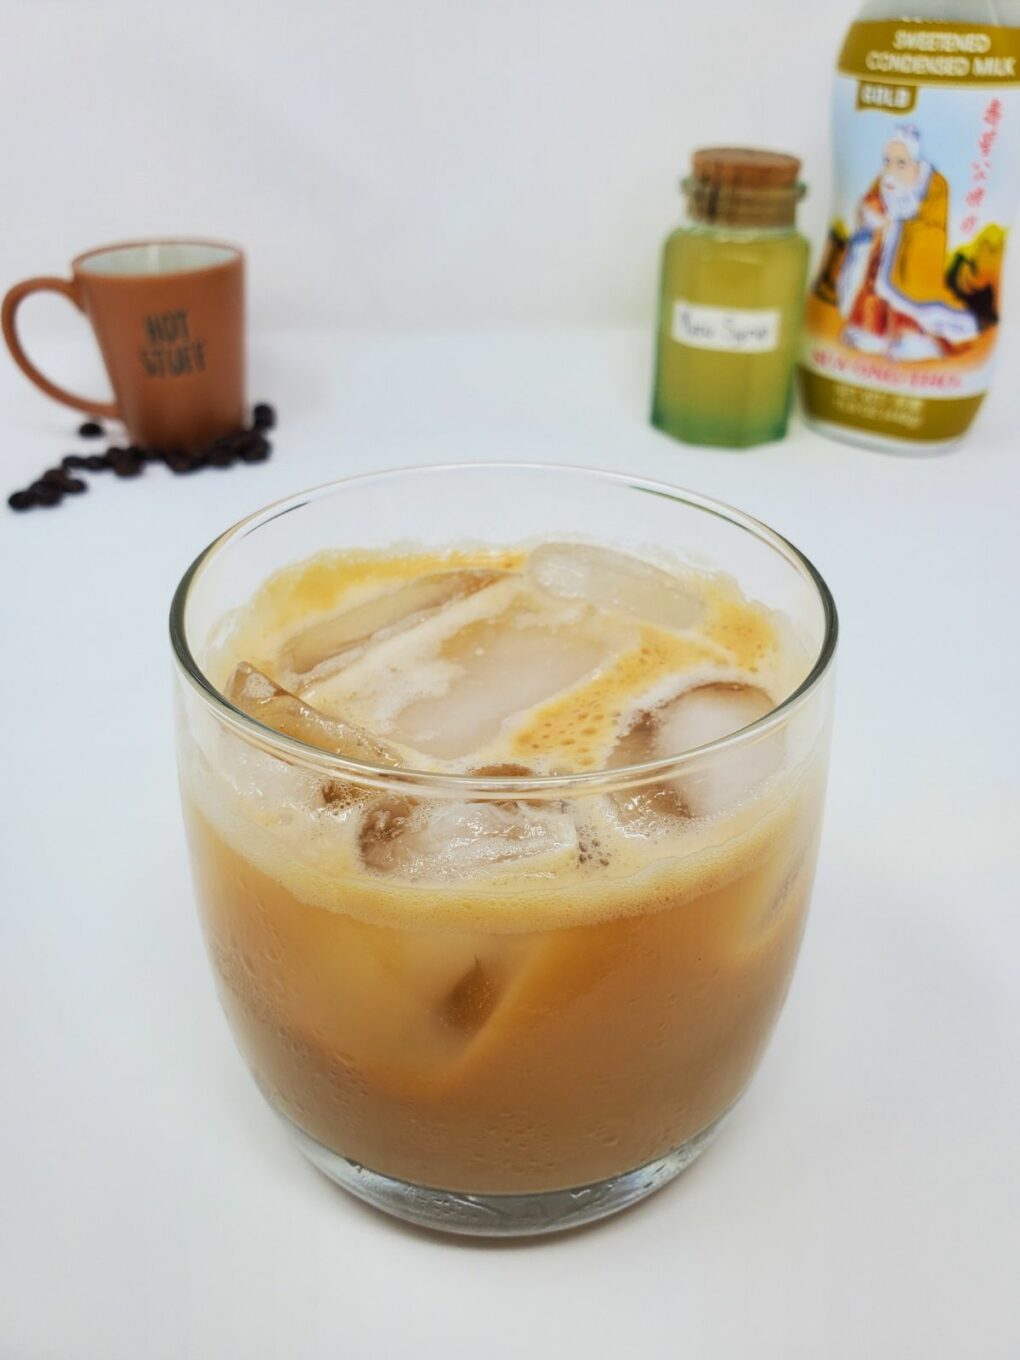 iced yuzu coffee mixture in a glass